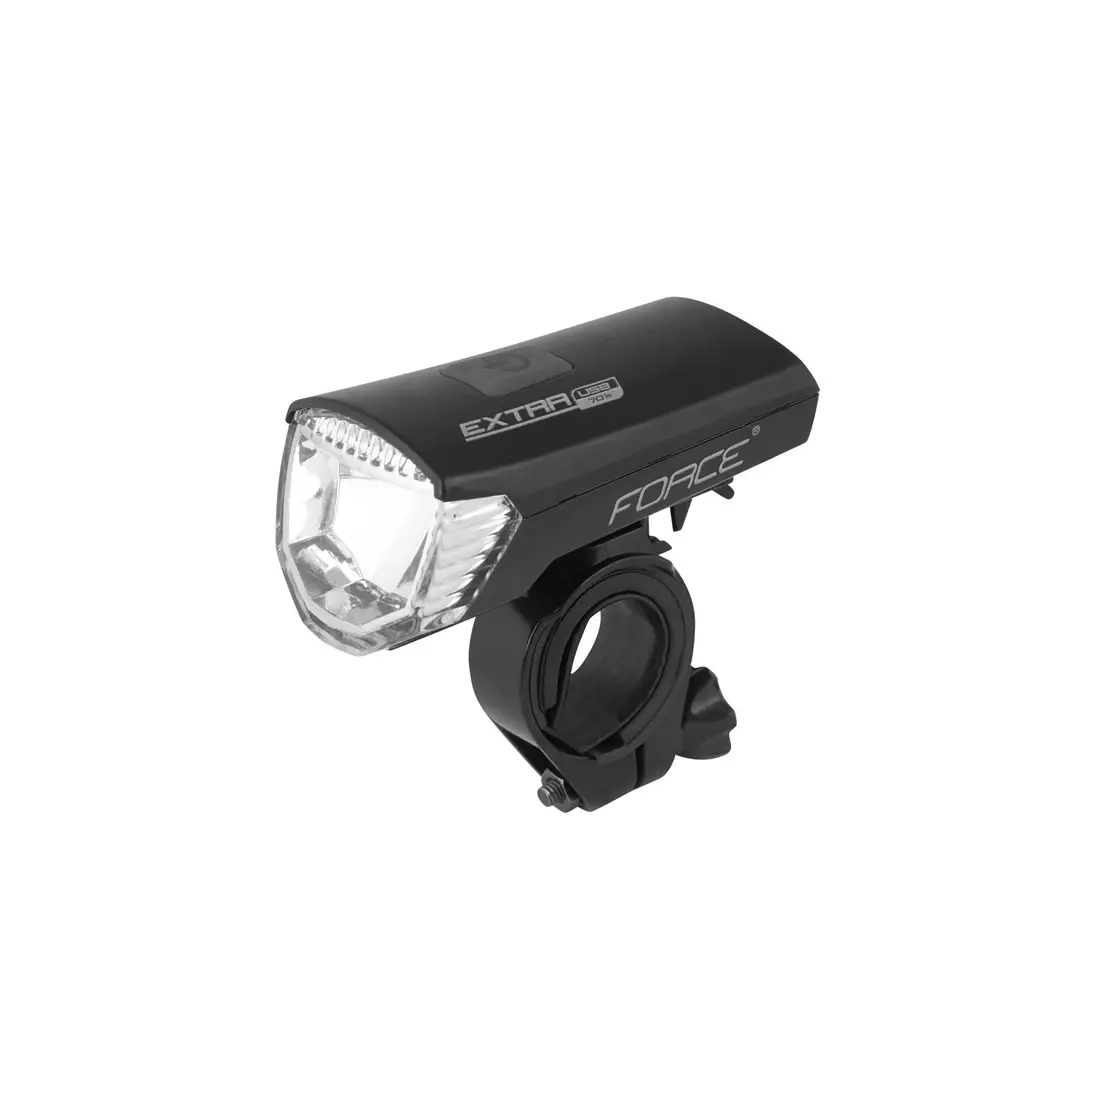 FORCE EXTRA - 45150 - Lumină frontală USB, LED, 70 lumeni